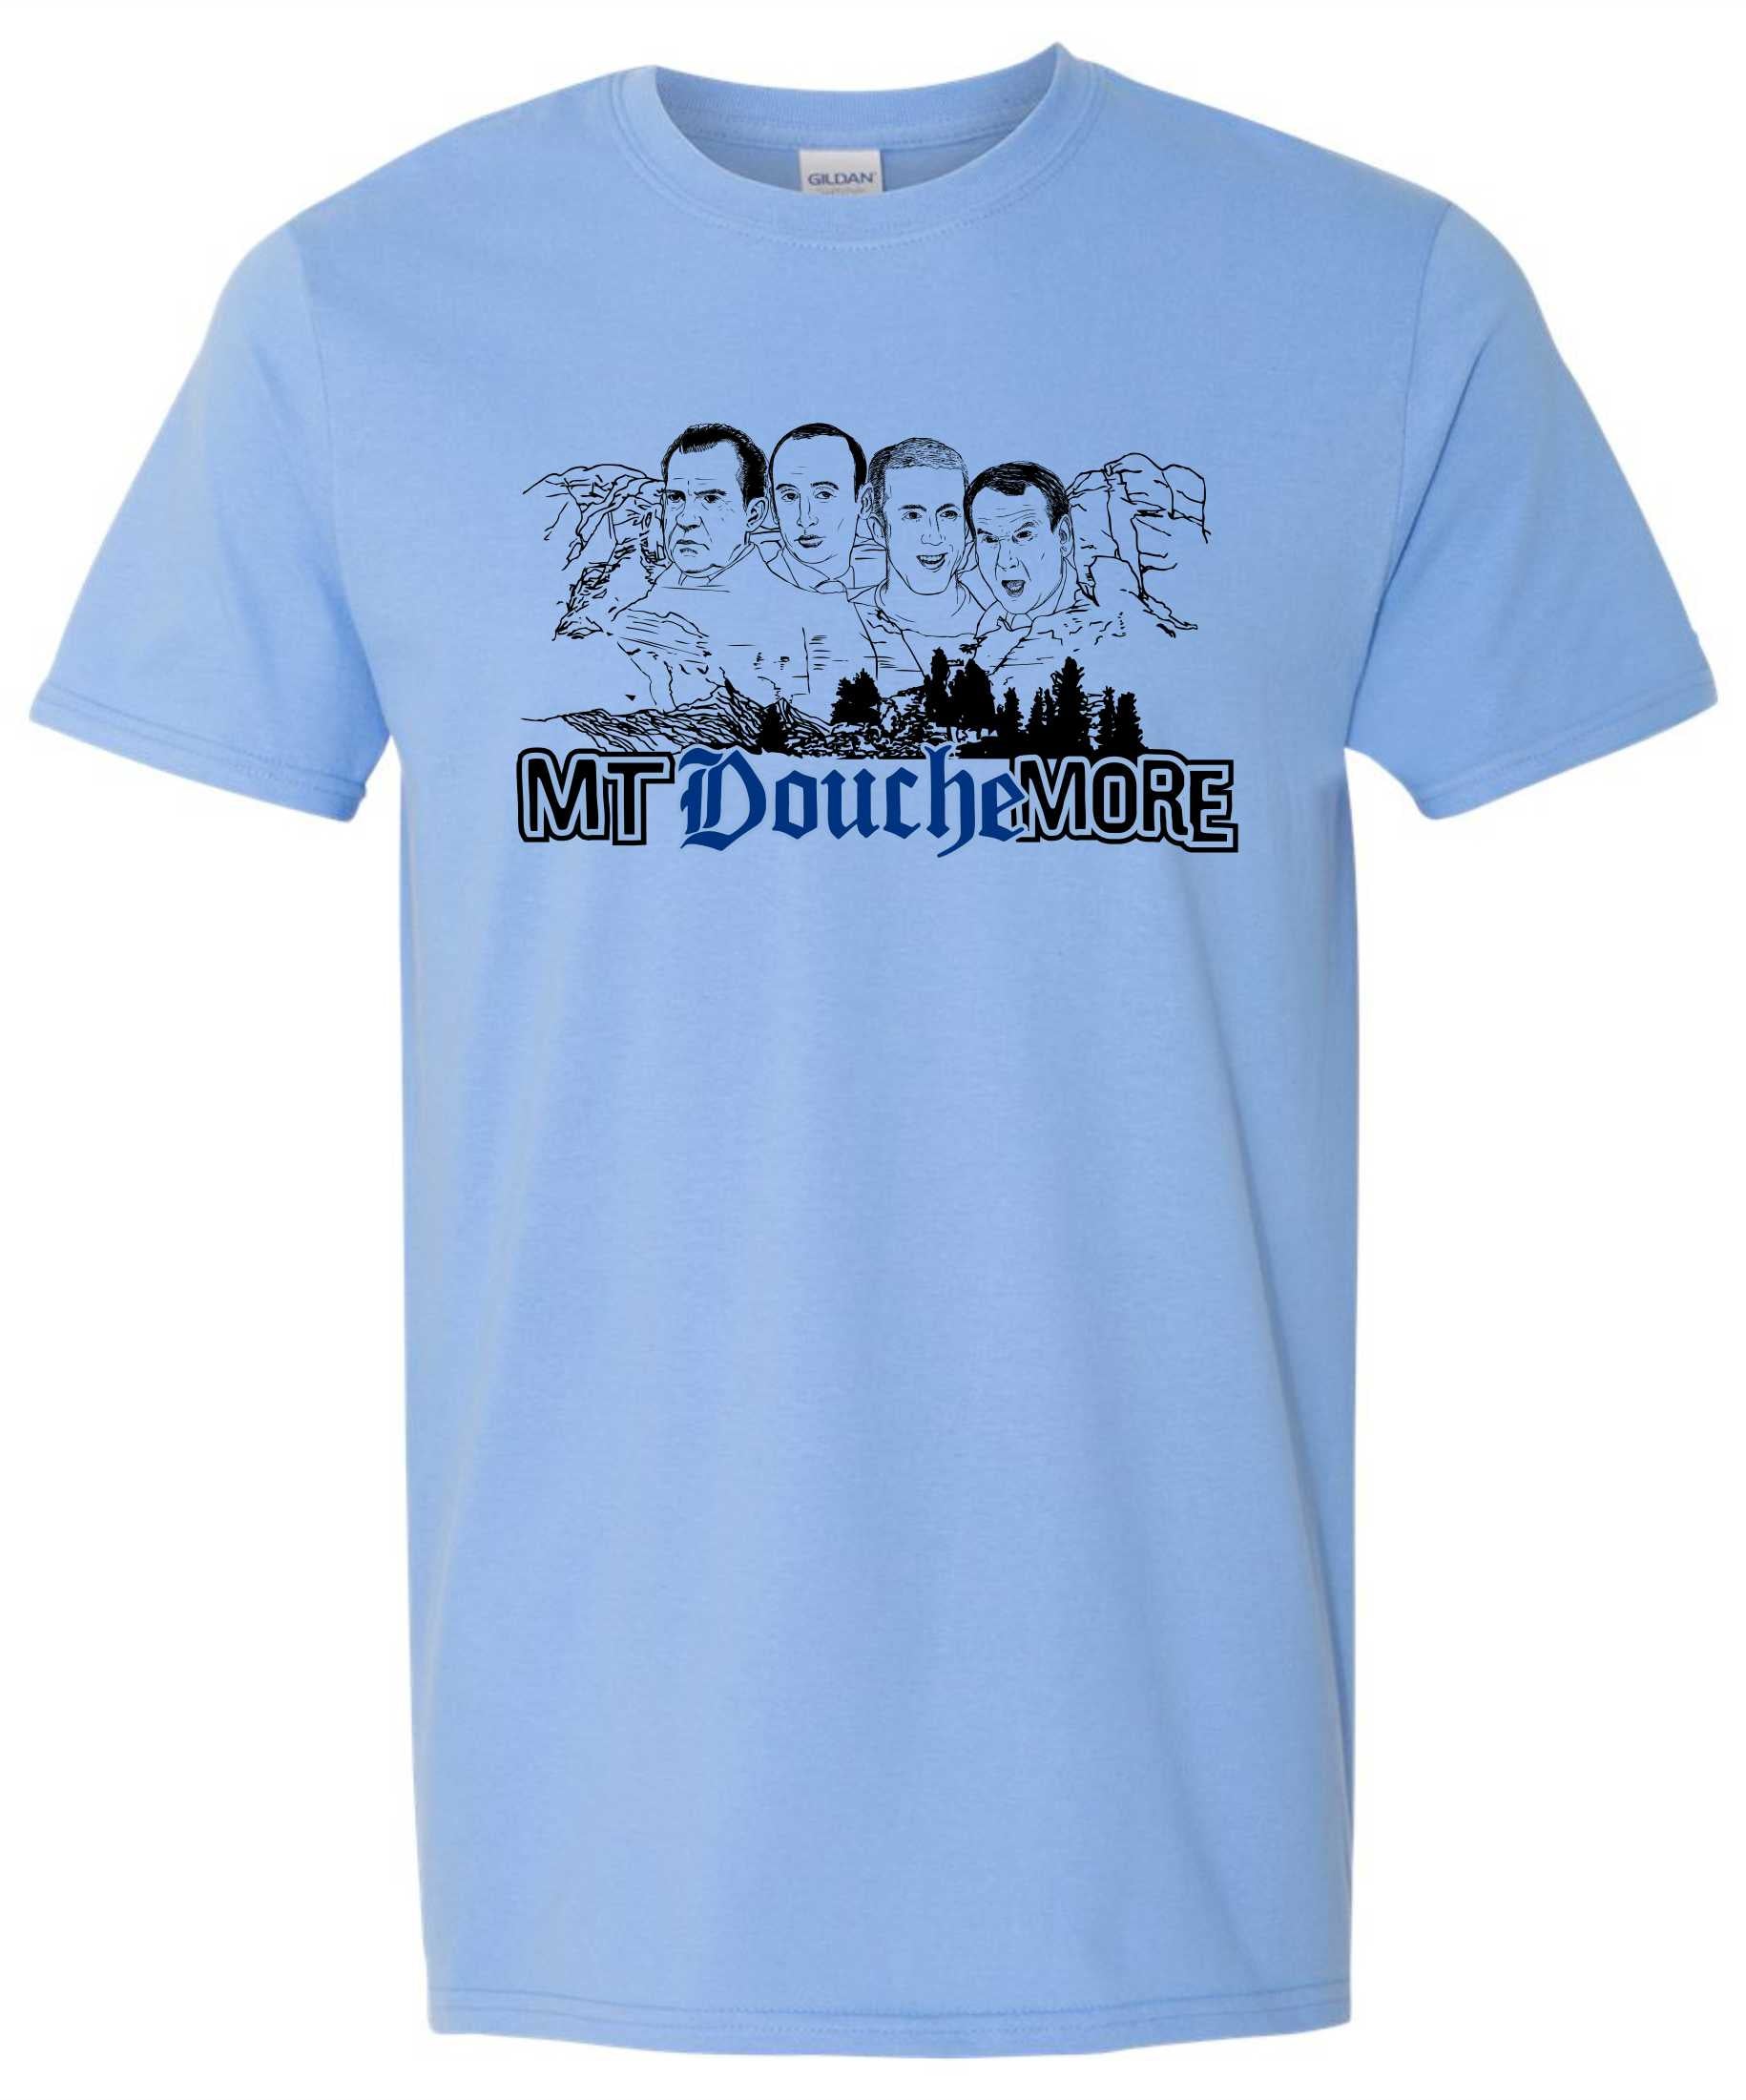 Mt. Douchemore T-Shirt